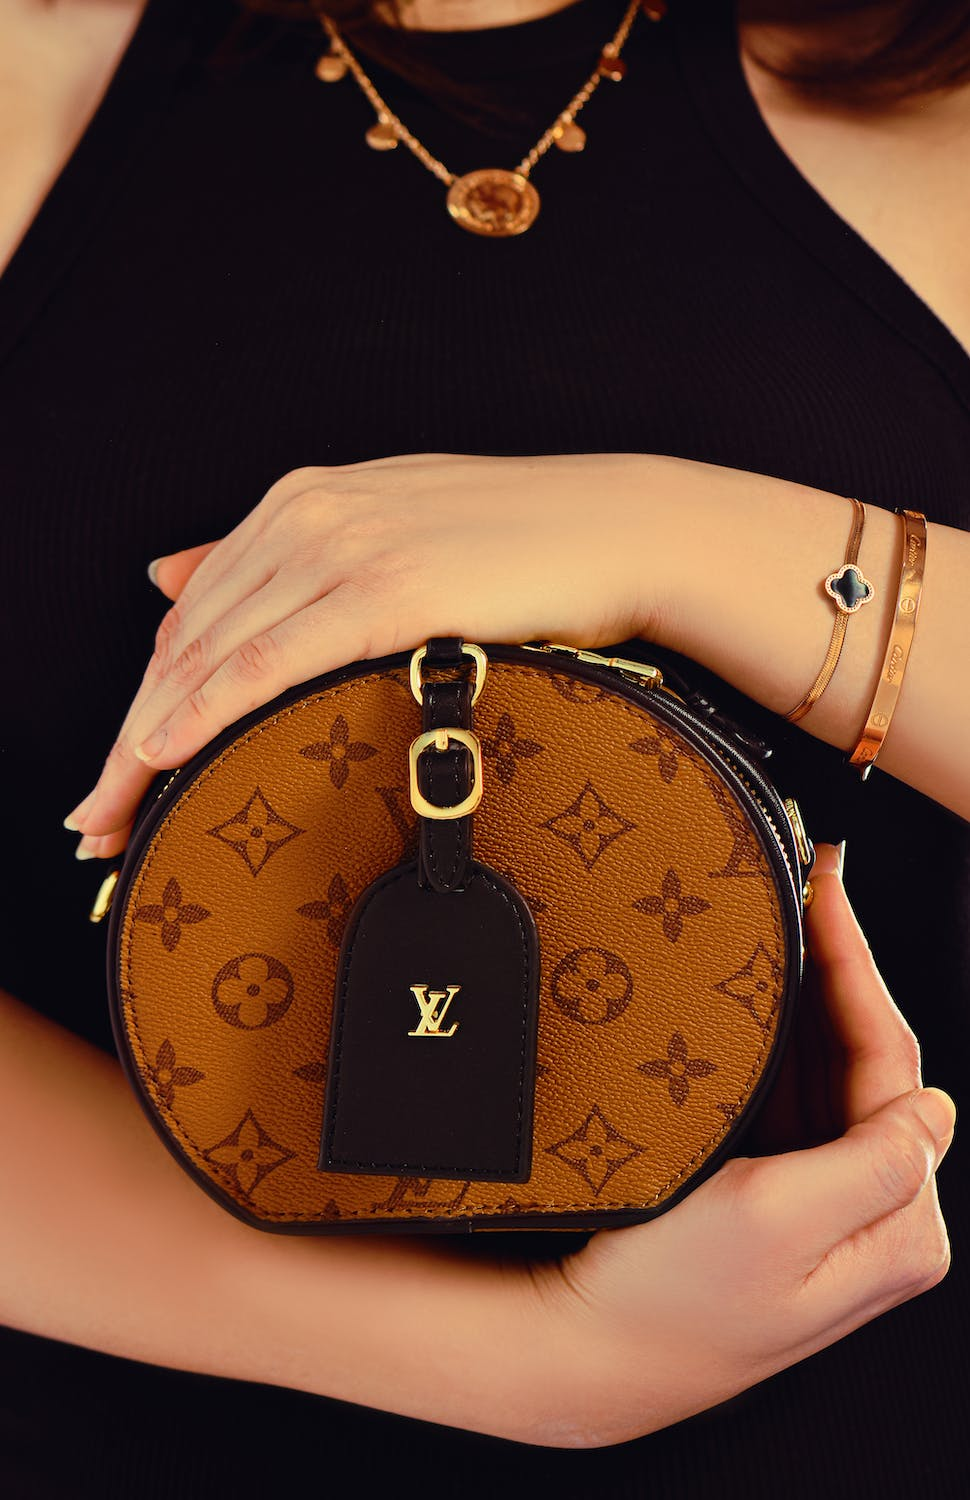 A woman's hands holding a Louis Vuitton bag.